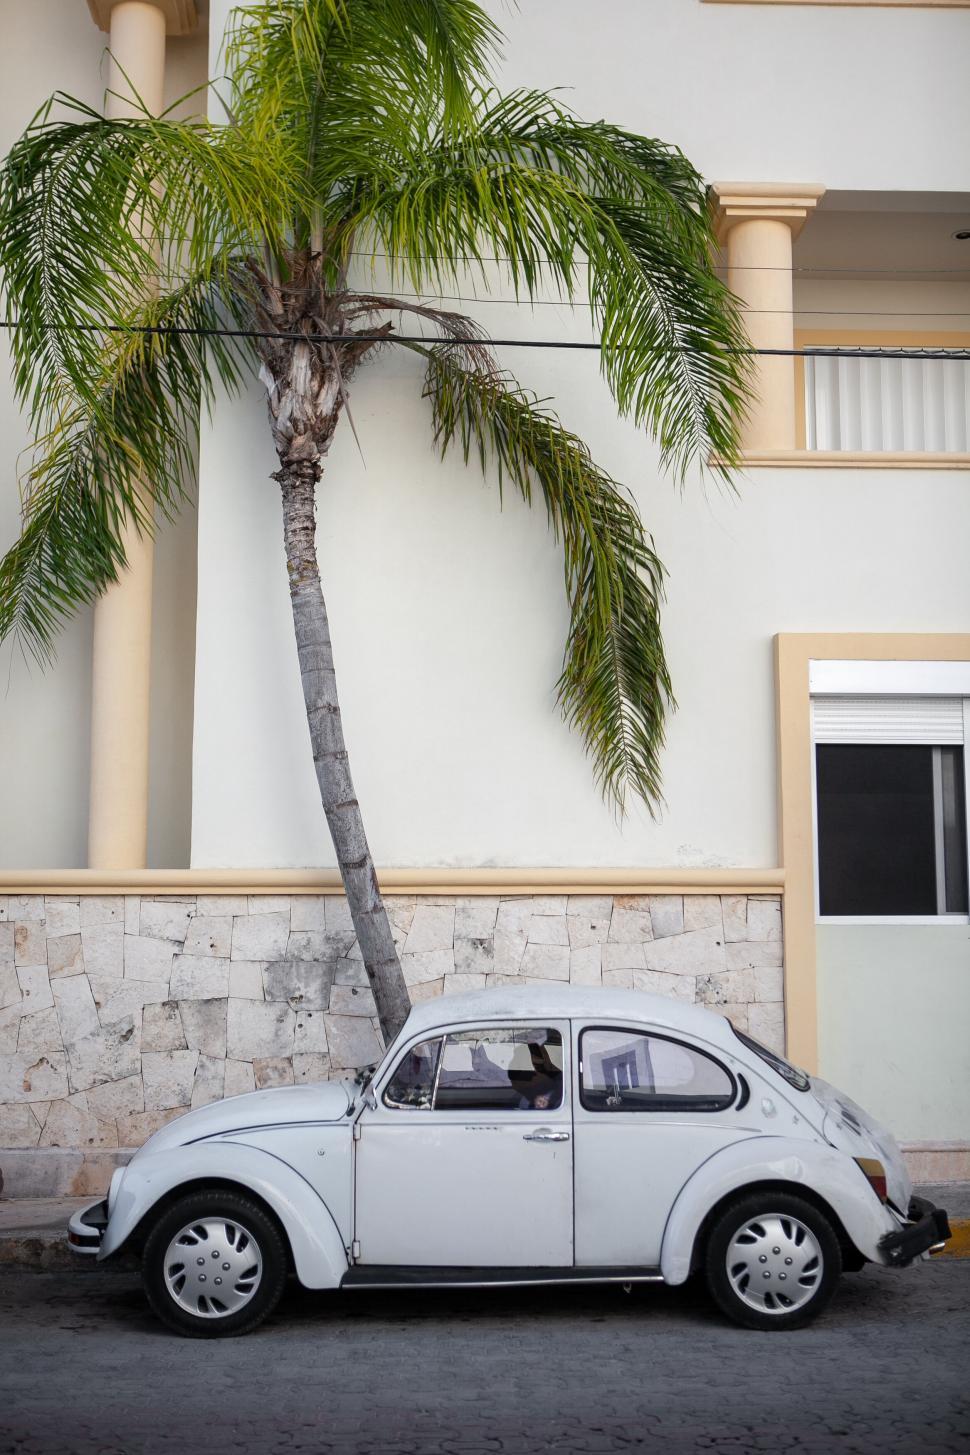 Free Image of Vintage white Volkswagen Beetle under palm 